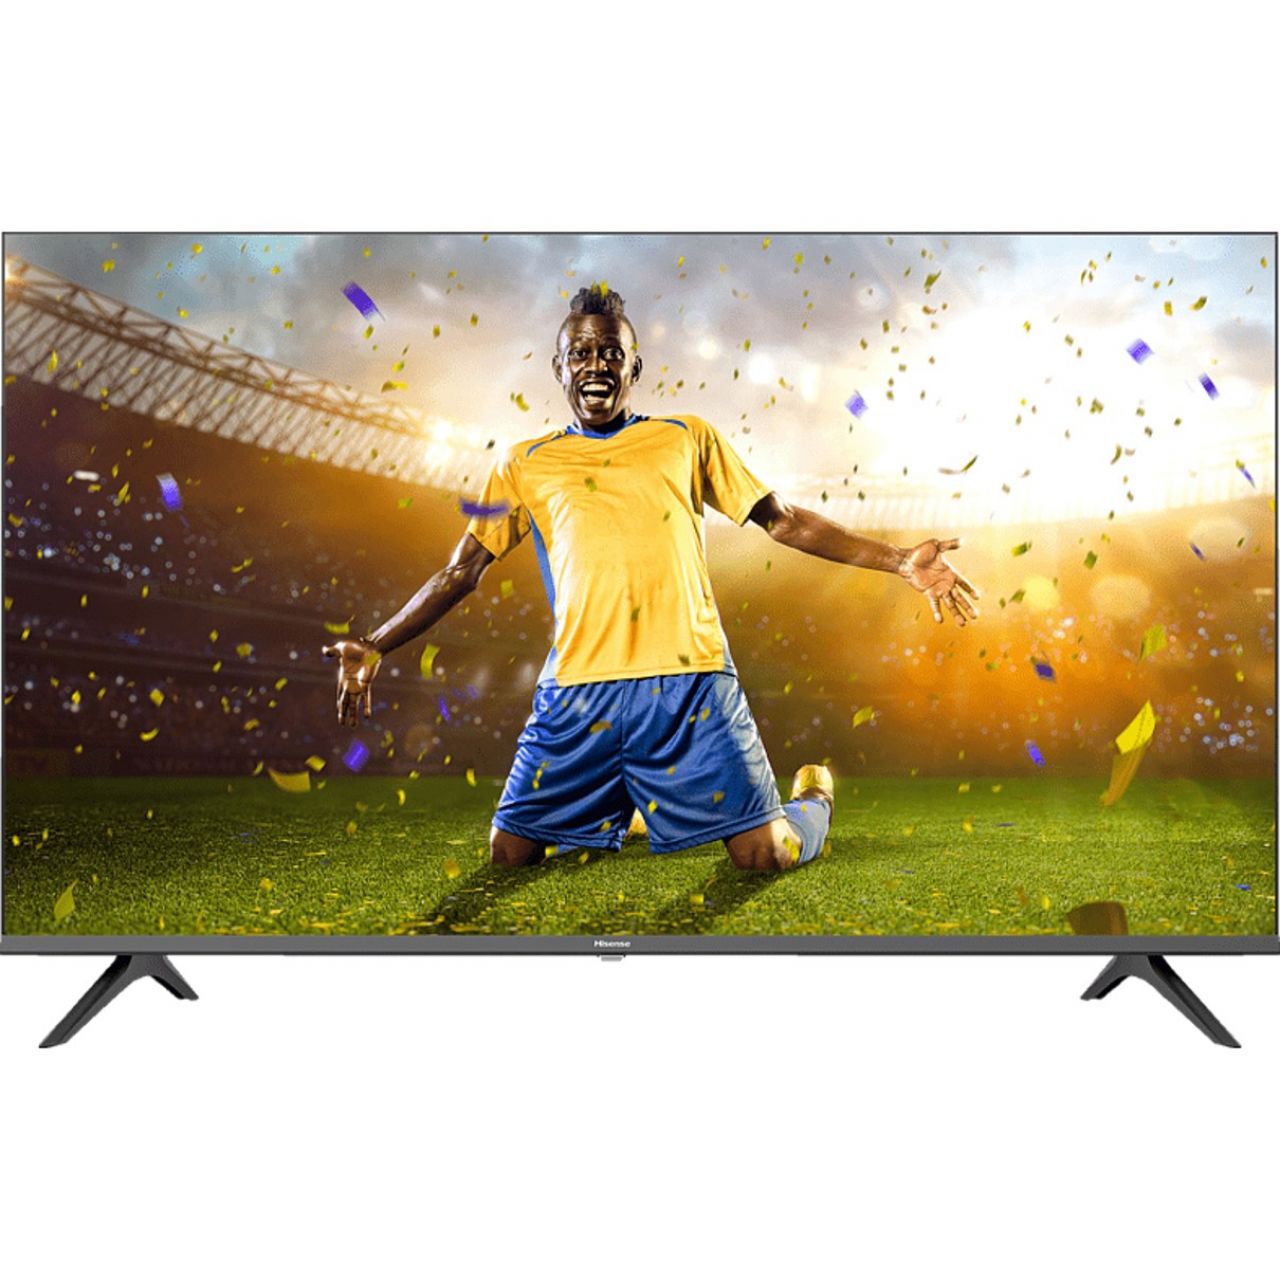 Destacada TV Hisense 40" LED Full HD - 40A5600F -  Smart TV